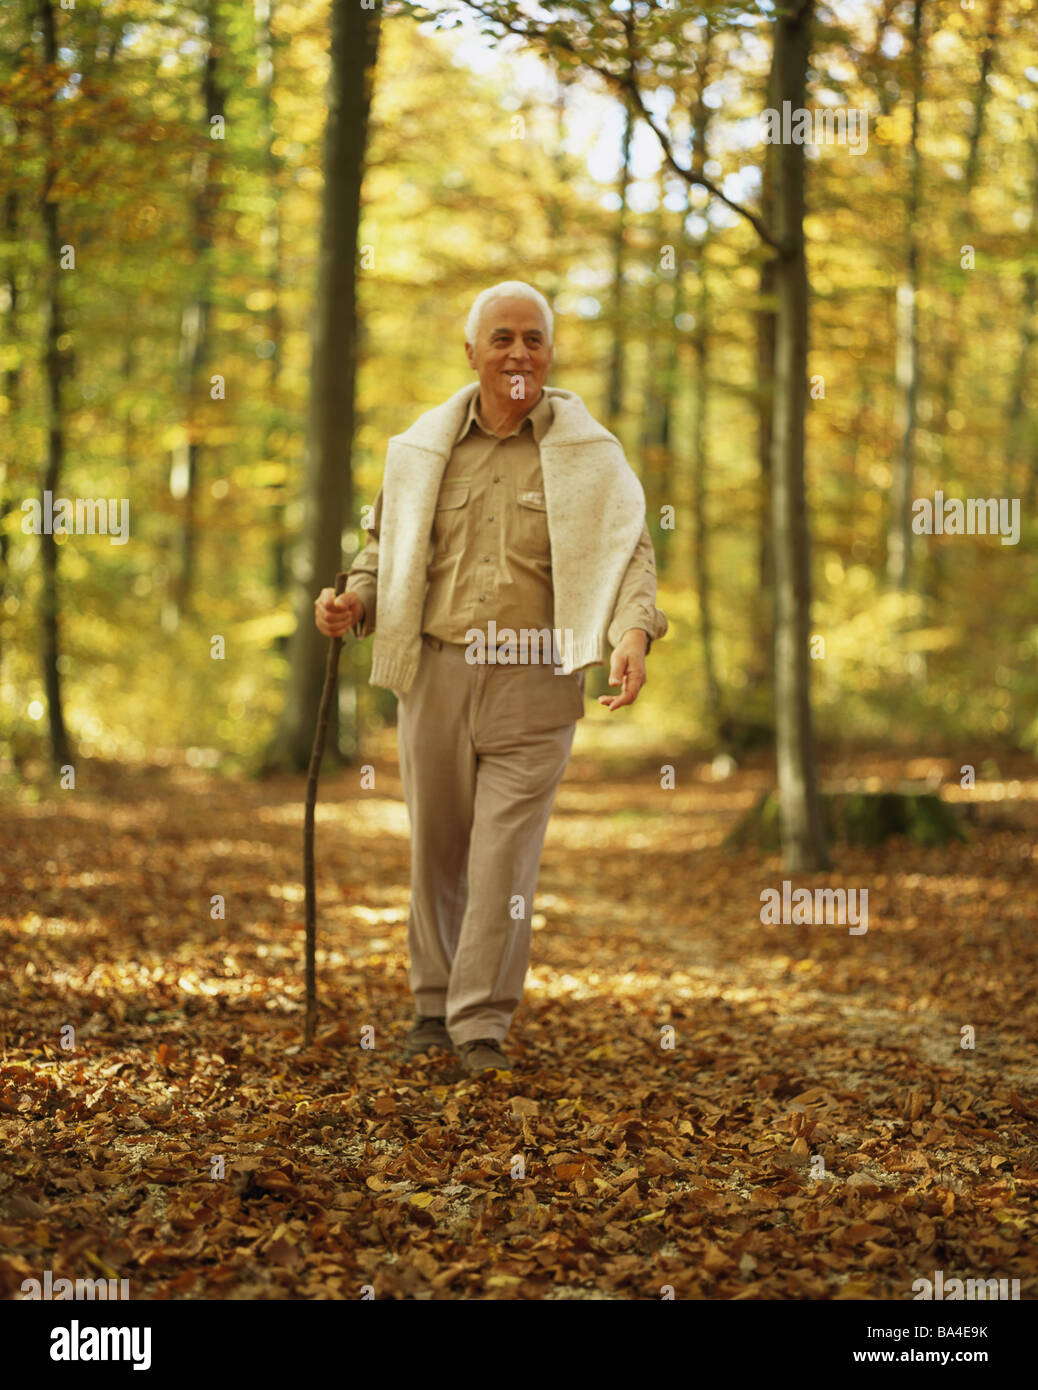 Forest senior Gehstock Spaziergang Herbst Serie Leute Mann 70-80 Jahre  weißhaarige Holz-Stick Stick Bewegung Aktivität Fitness geht  Stockfotografie - Alamy